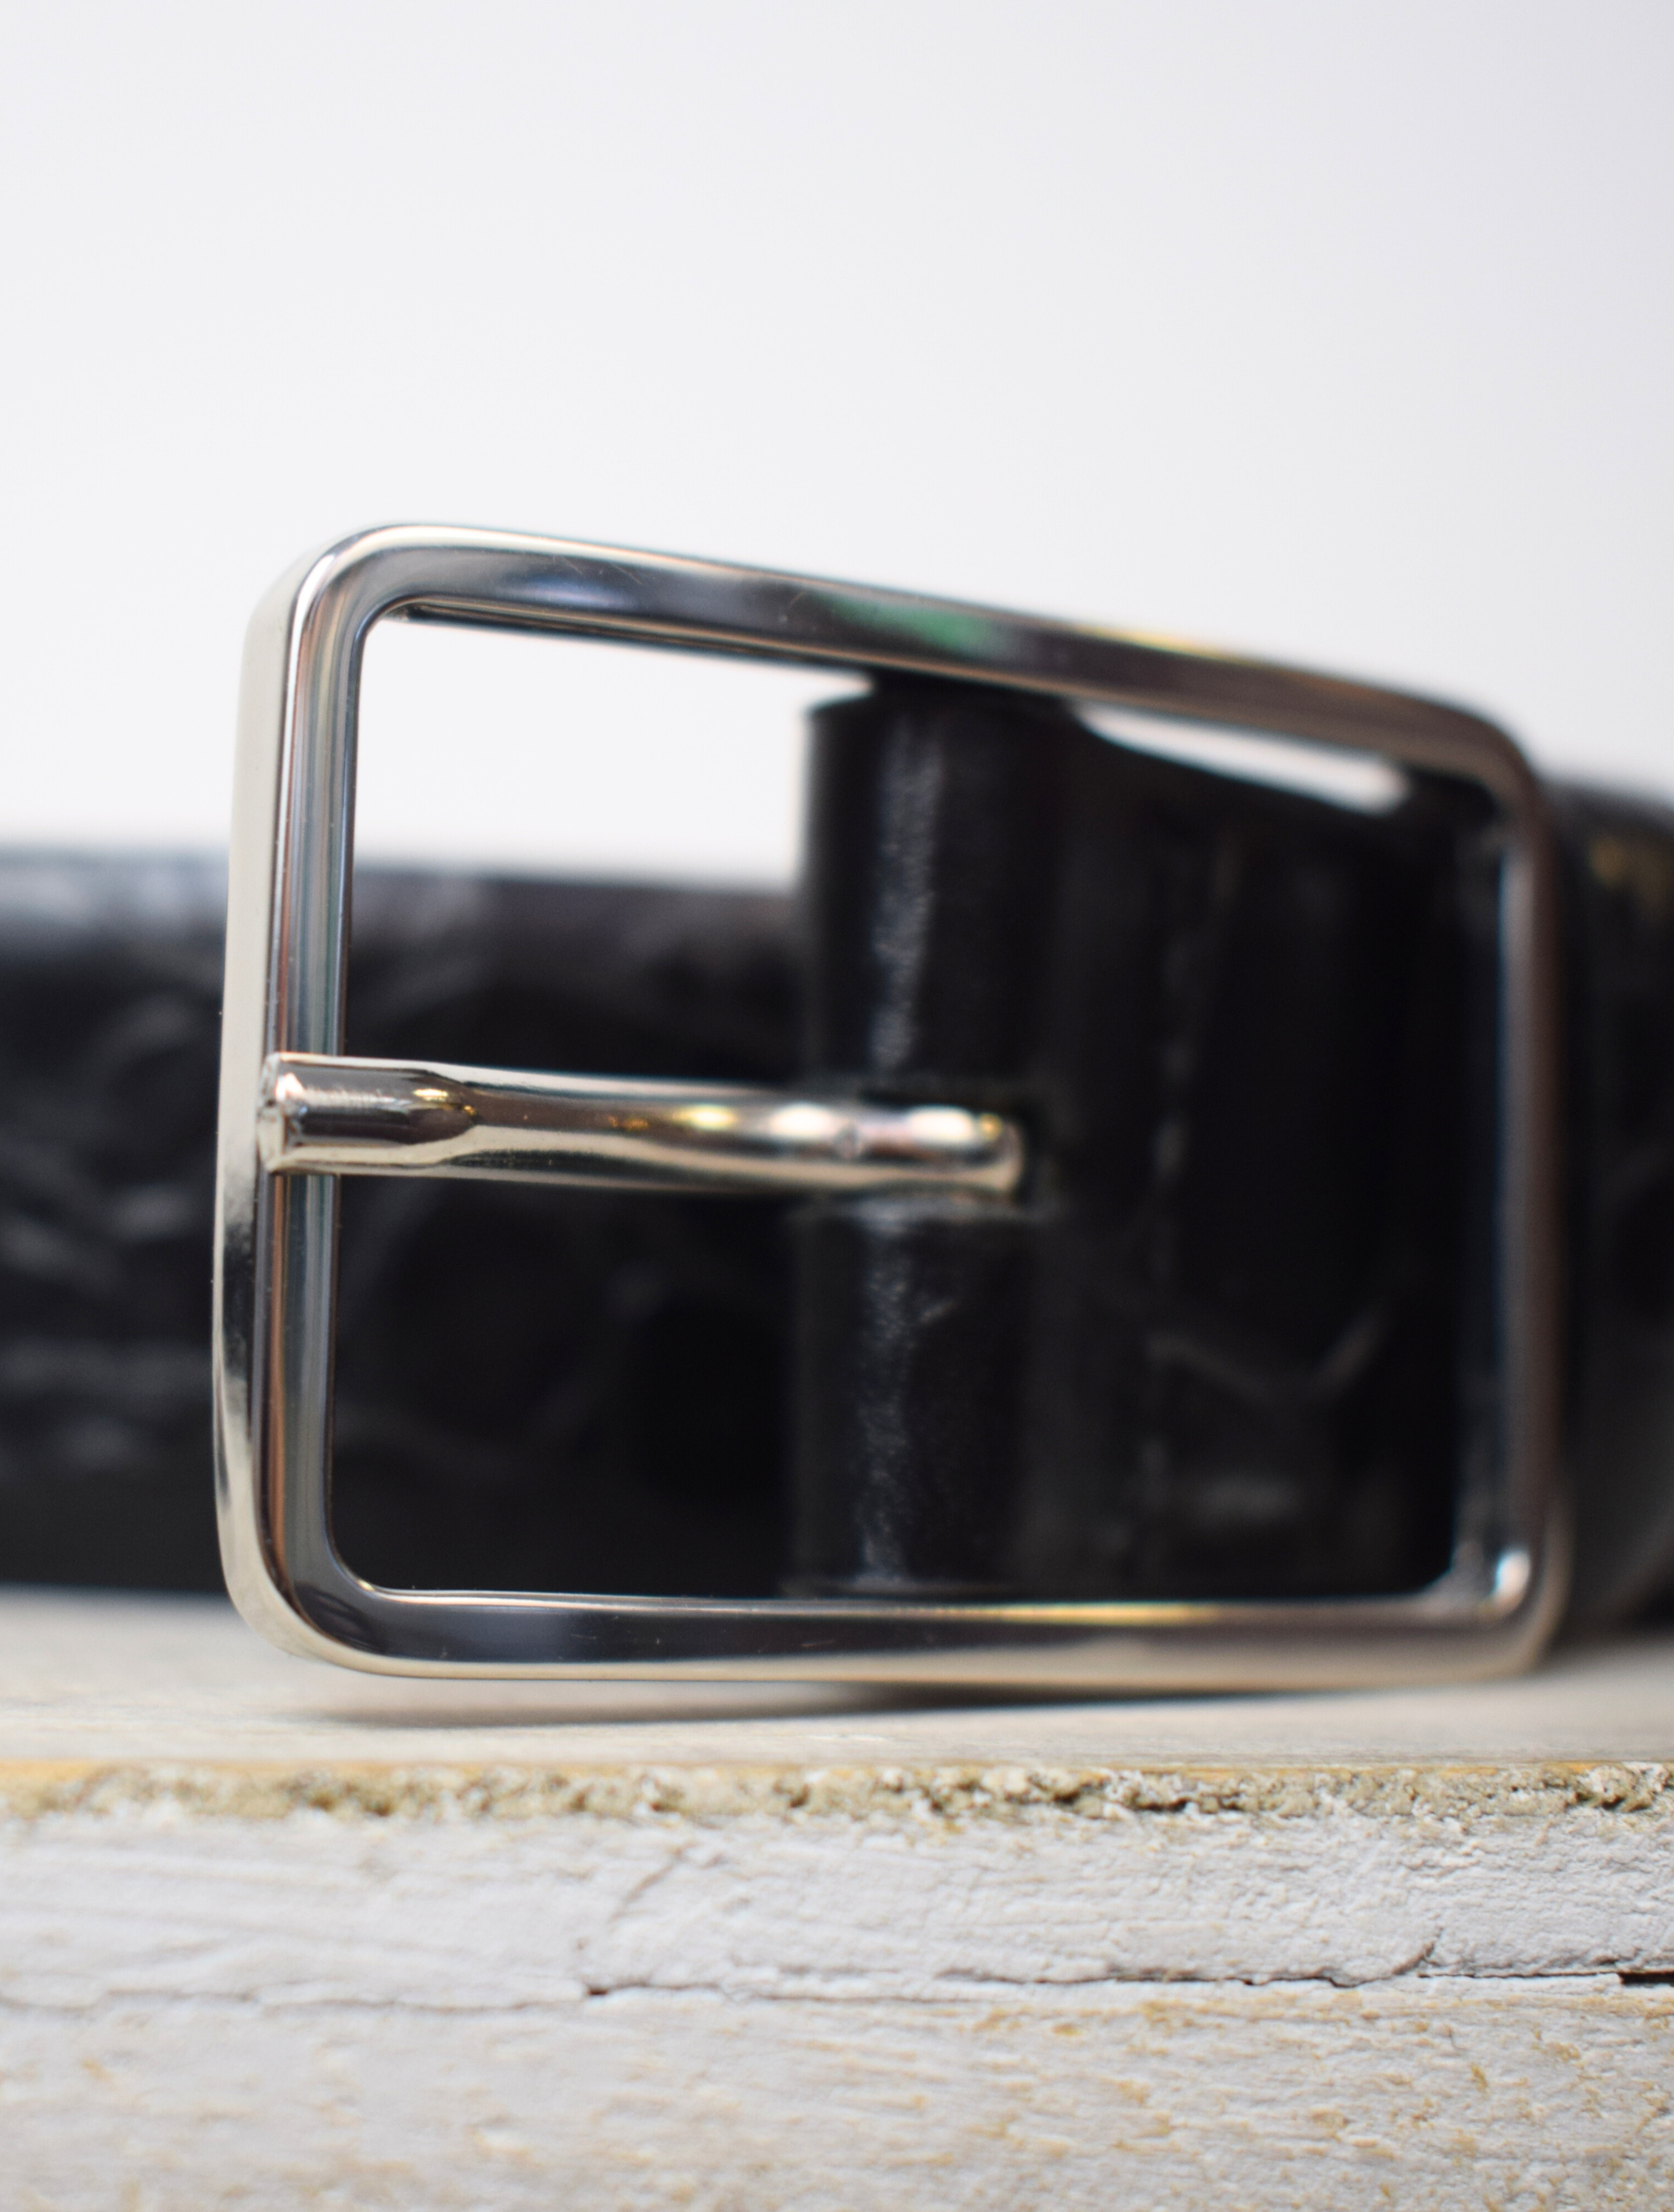 Medium mock croc black leather belt with silver oblong buckle